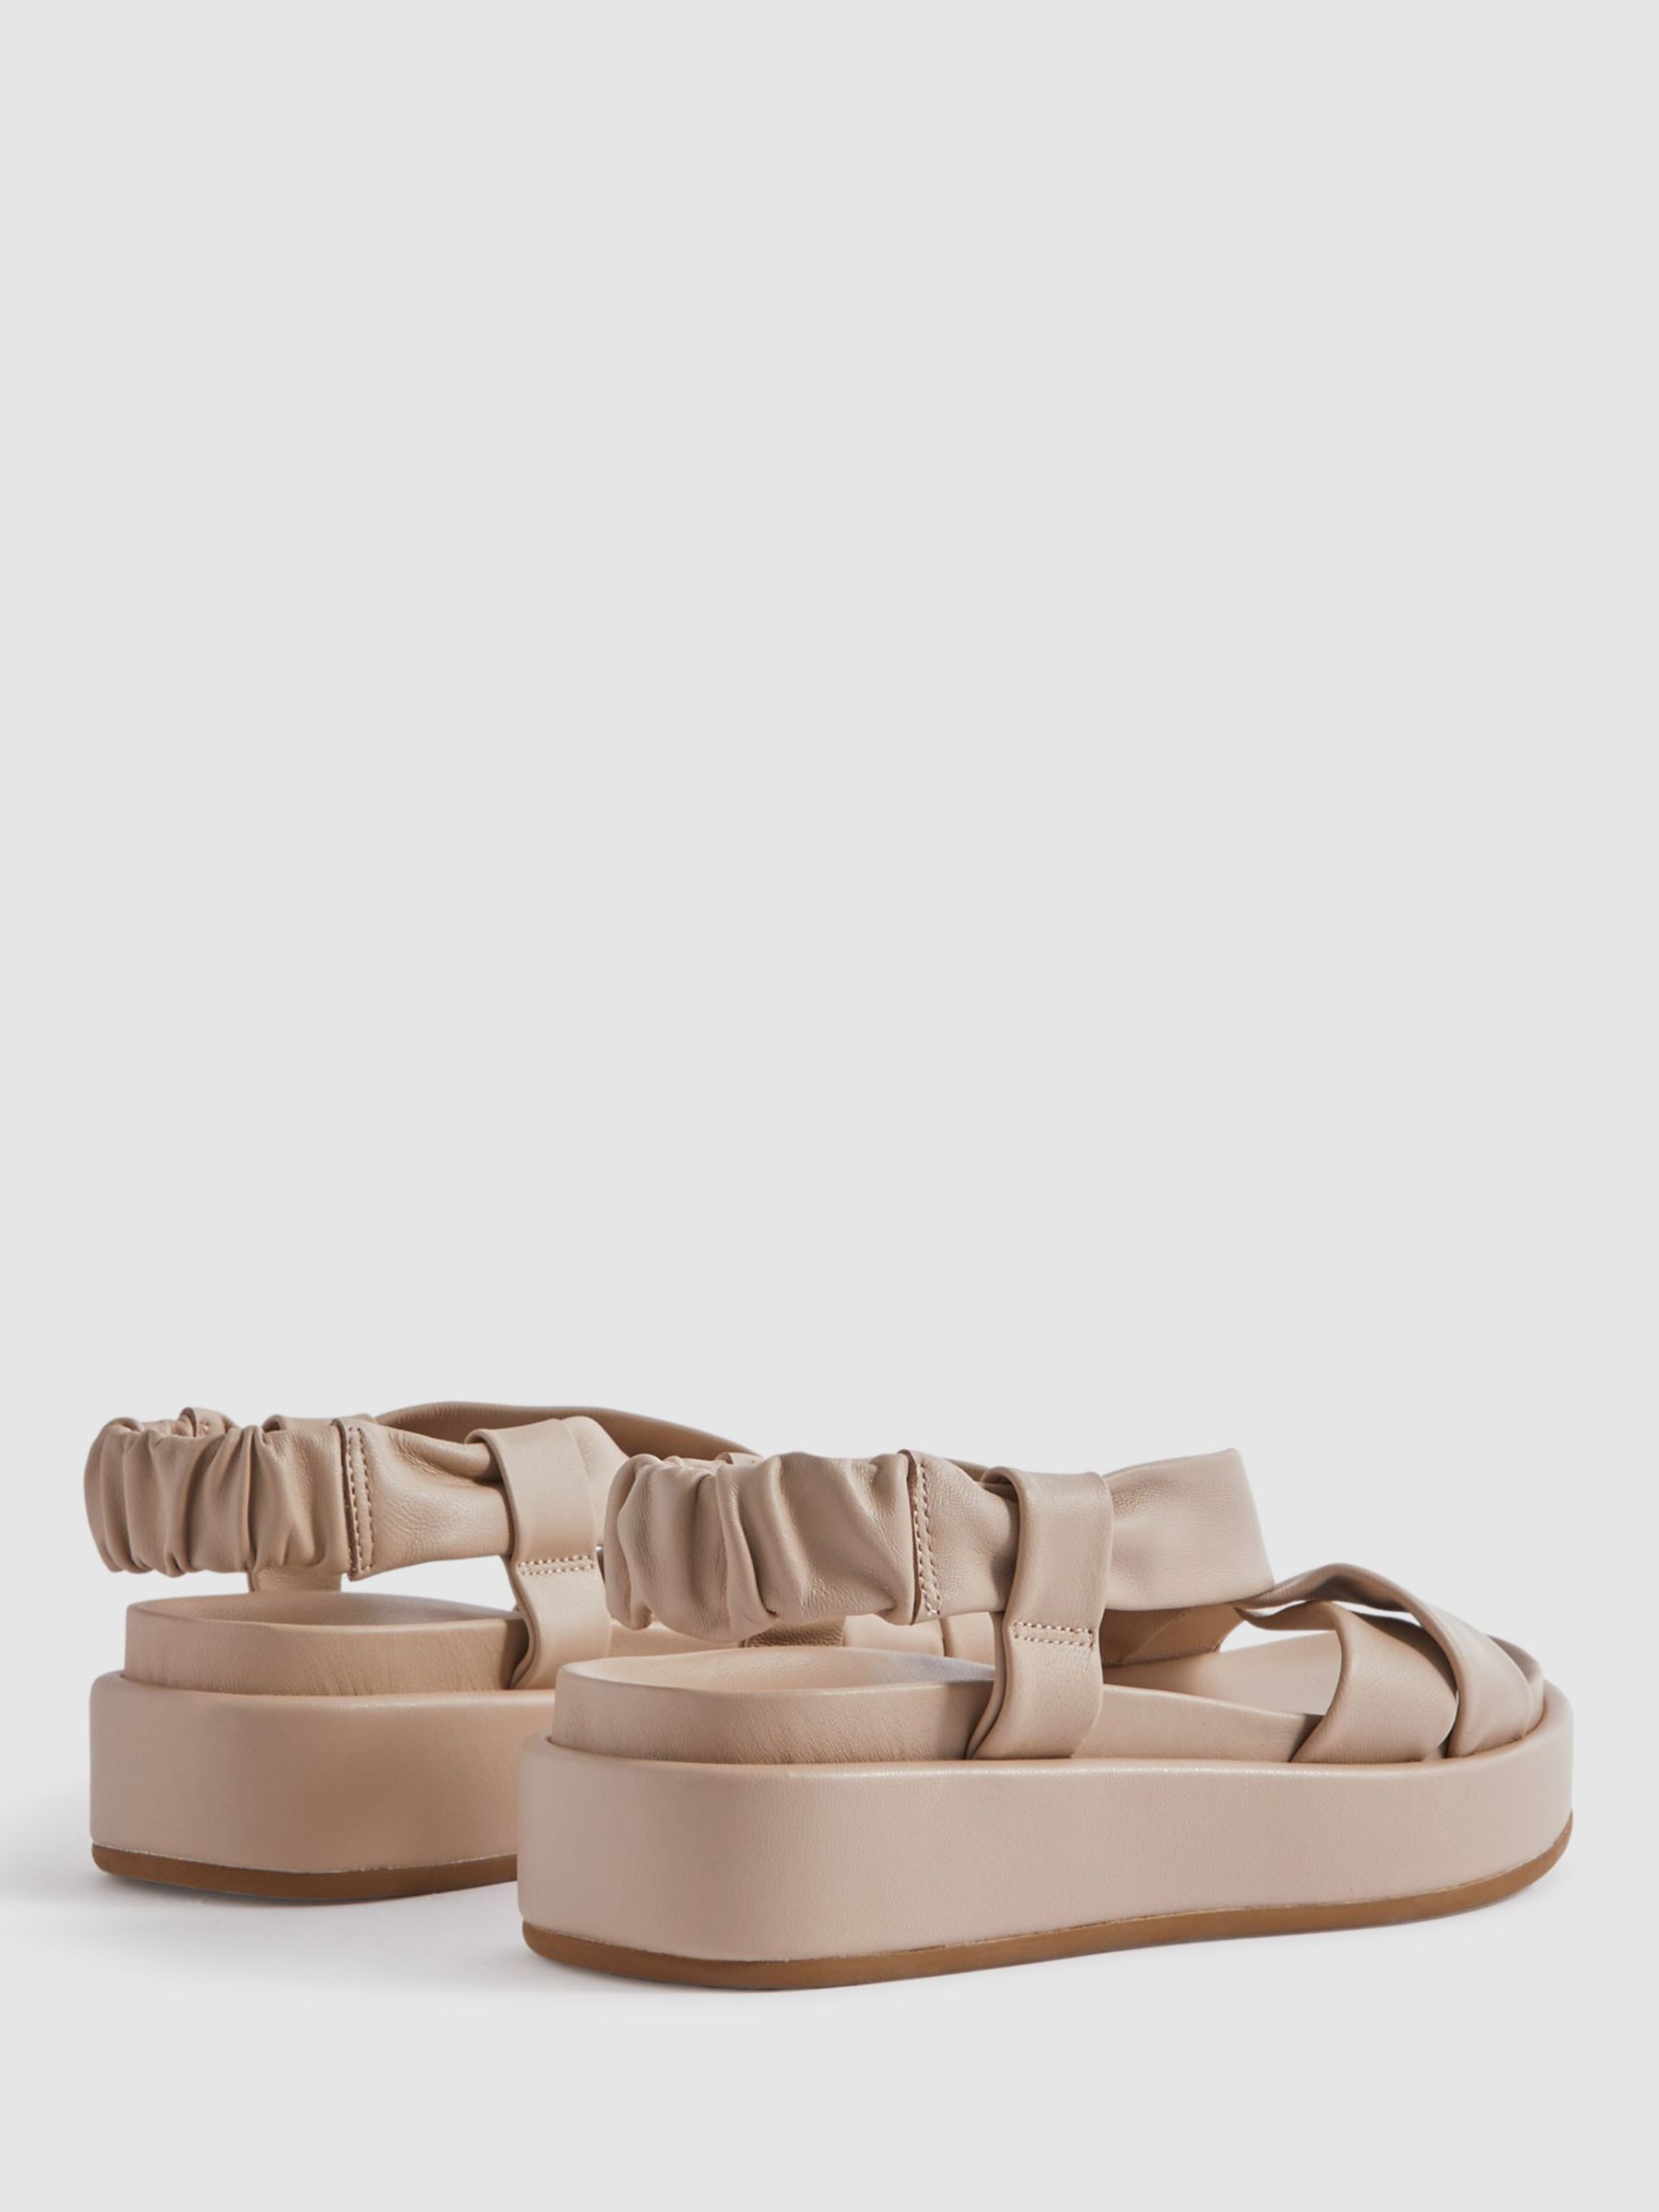 Reiss Melanie Leather Flatform Sandals, Nude, 3